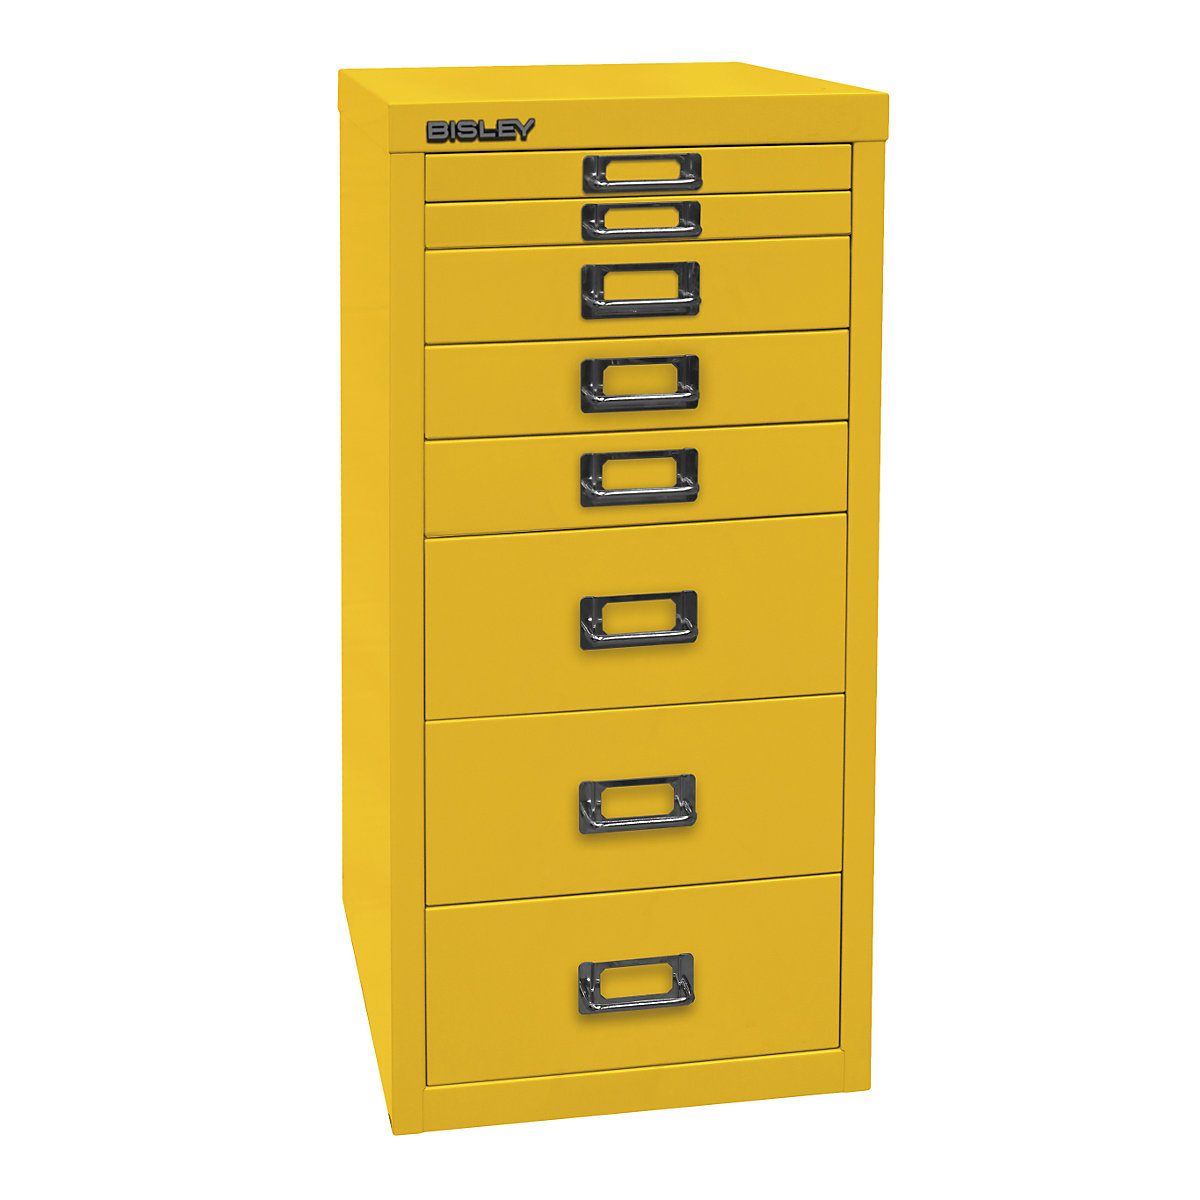 MultiDrawer™ 29 series – BISLEY, A4, 8 drawers, yellow-5